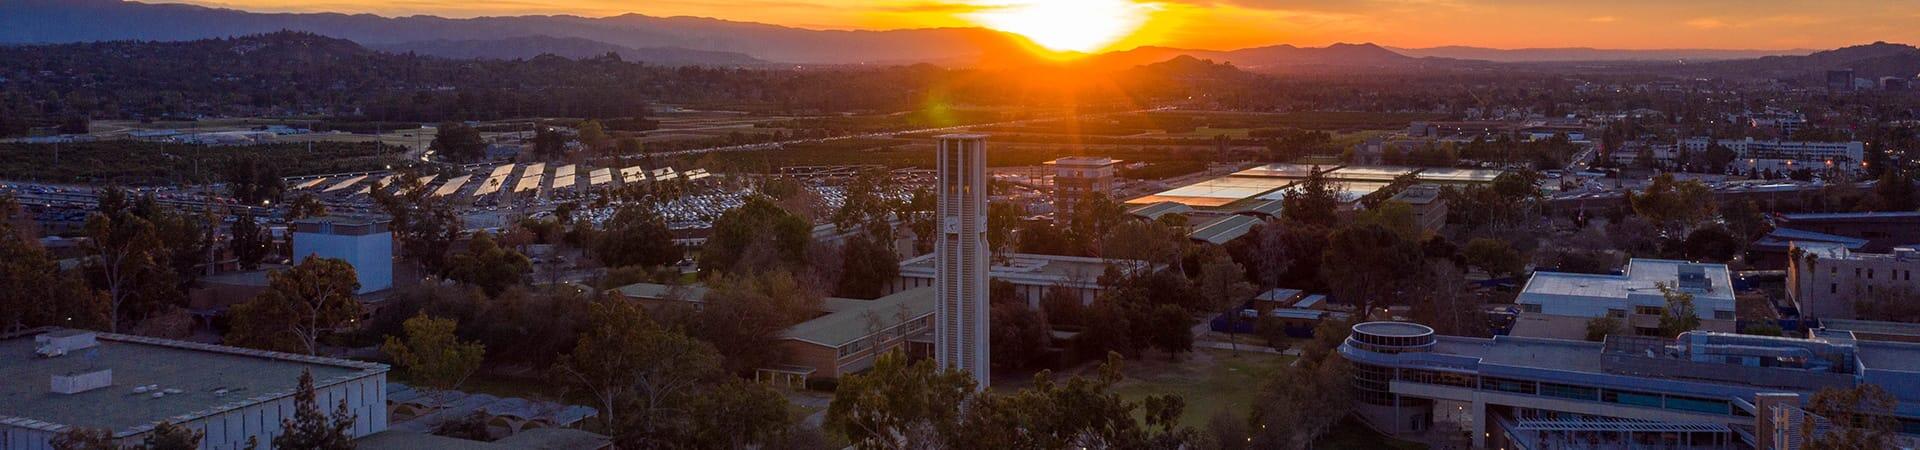 UCR campus during sunset